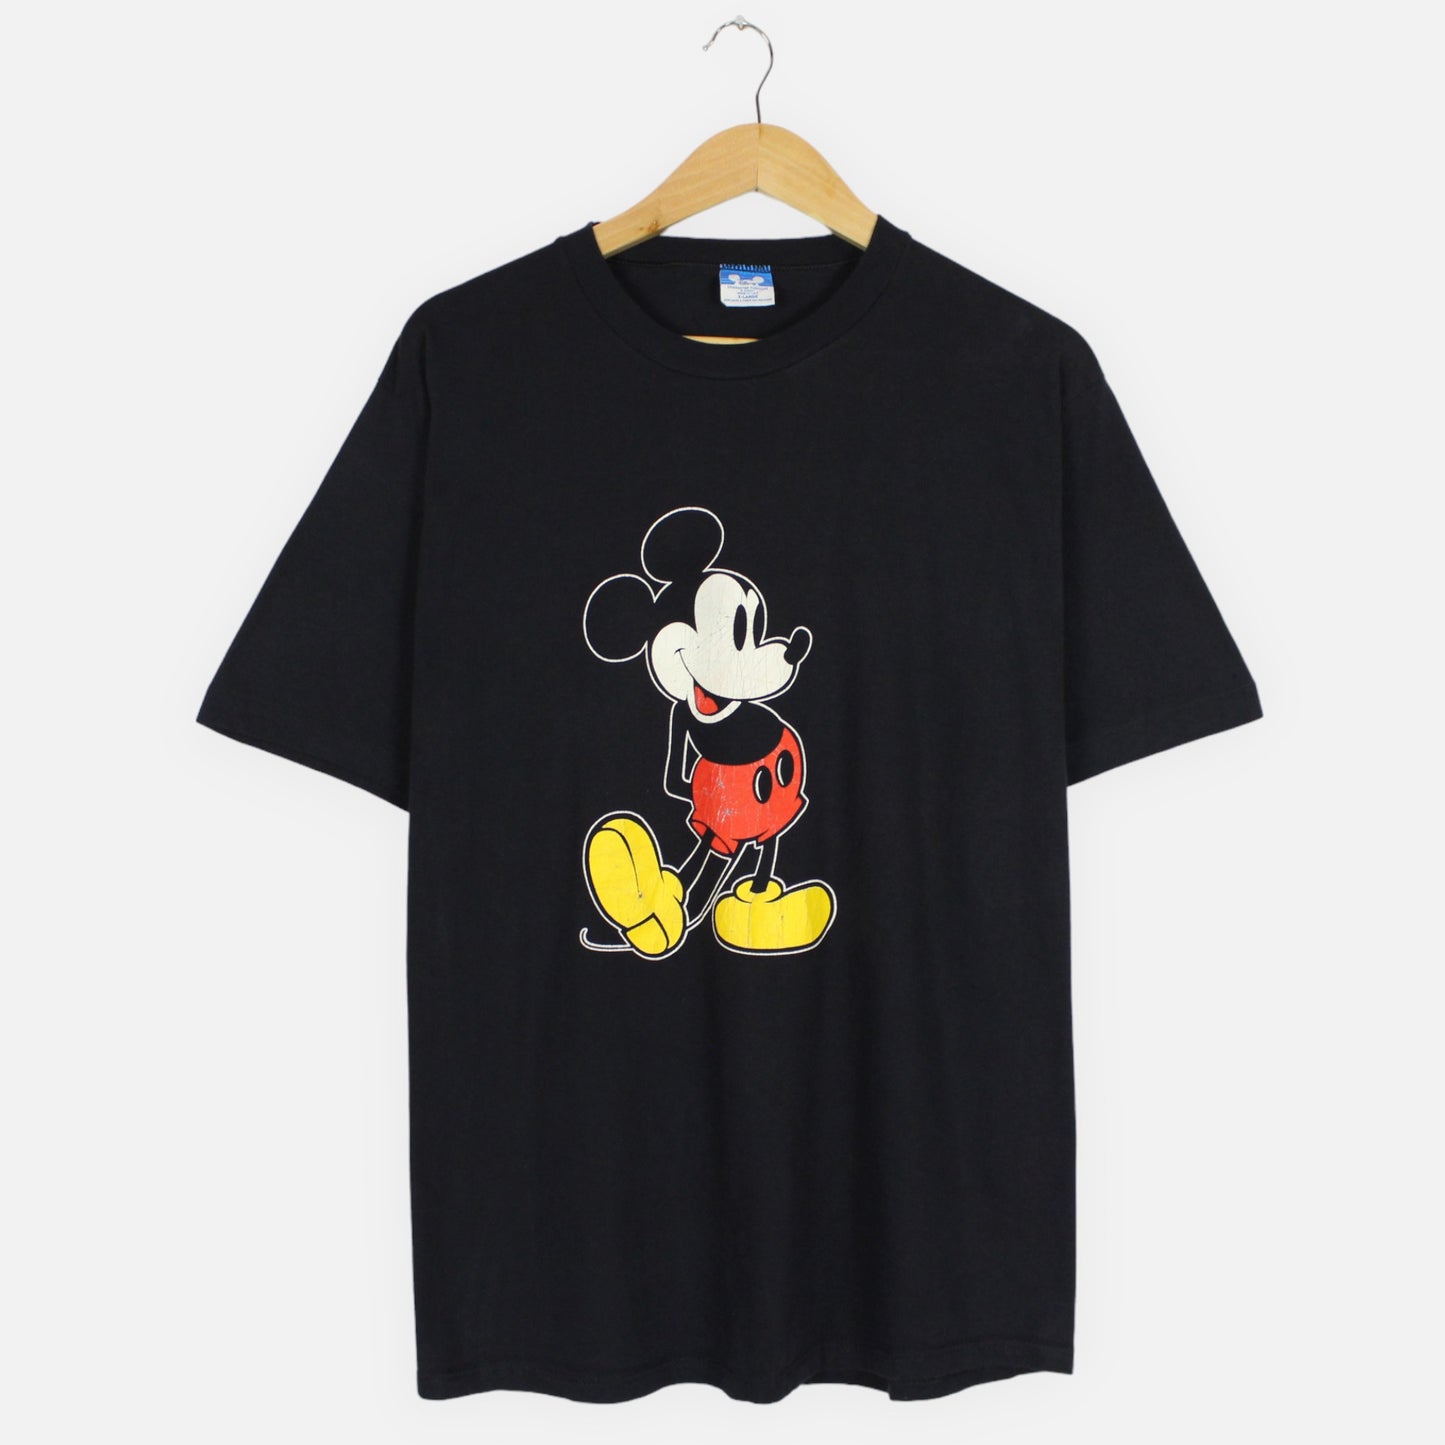 Vintage 80's Mickey Mouse Disney Tee - XL